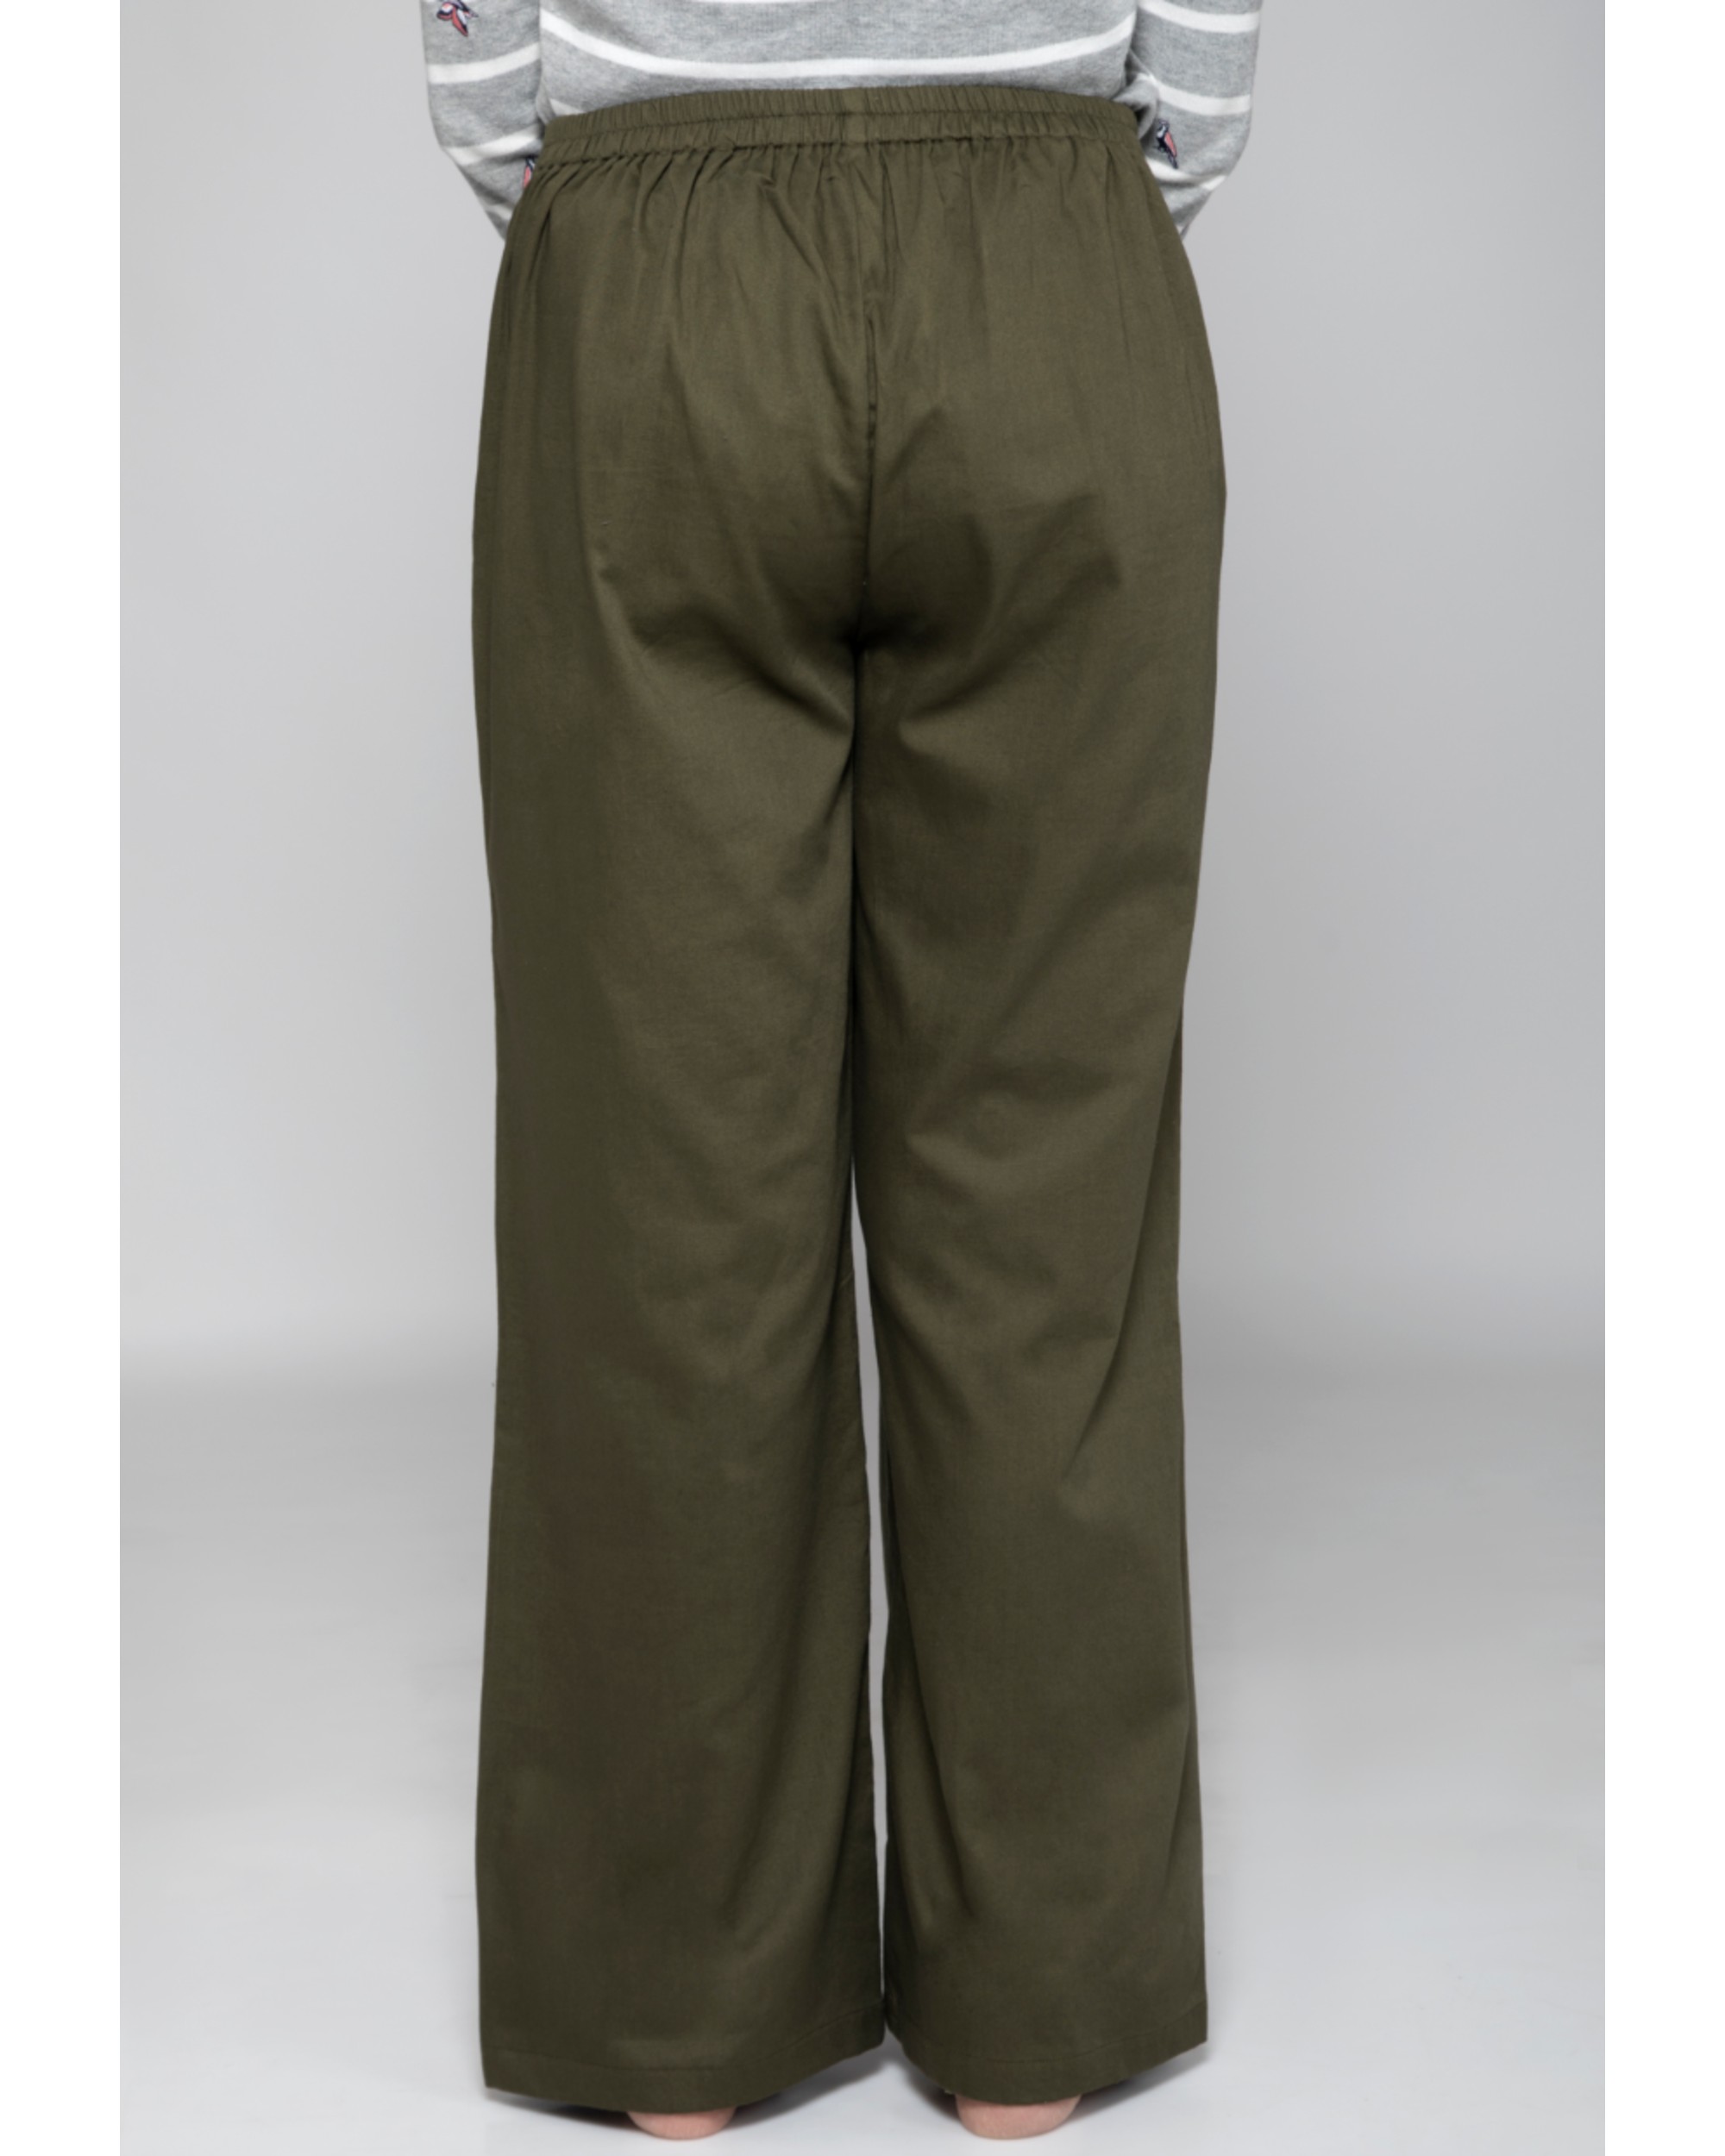 Olive green high waist pants by Santav | The Secret Label